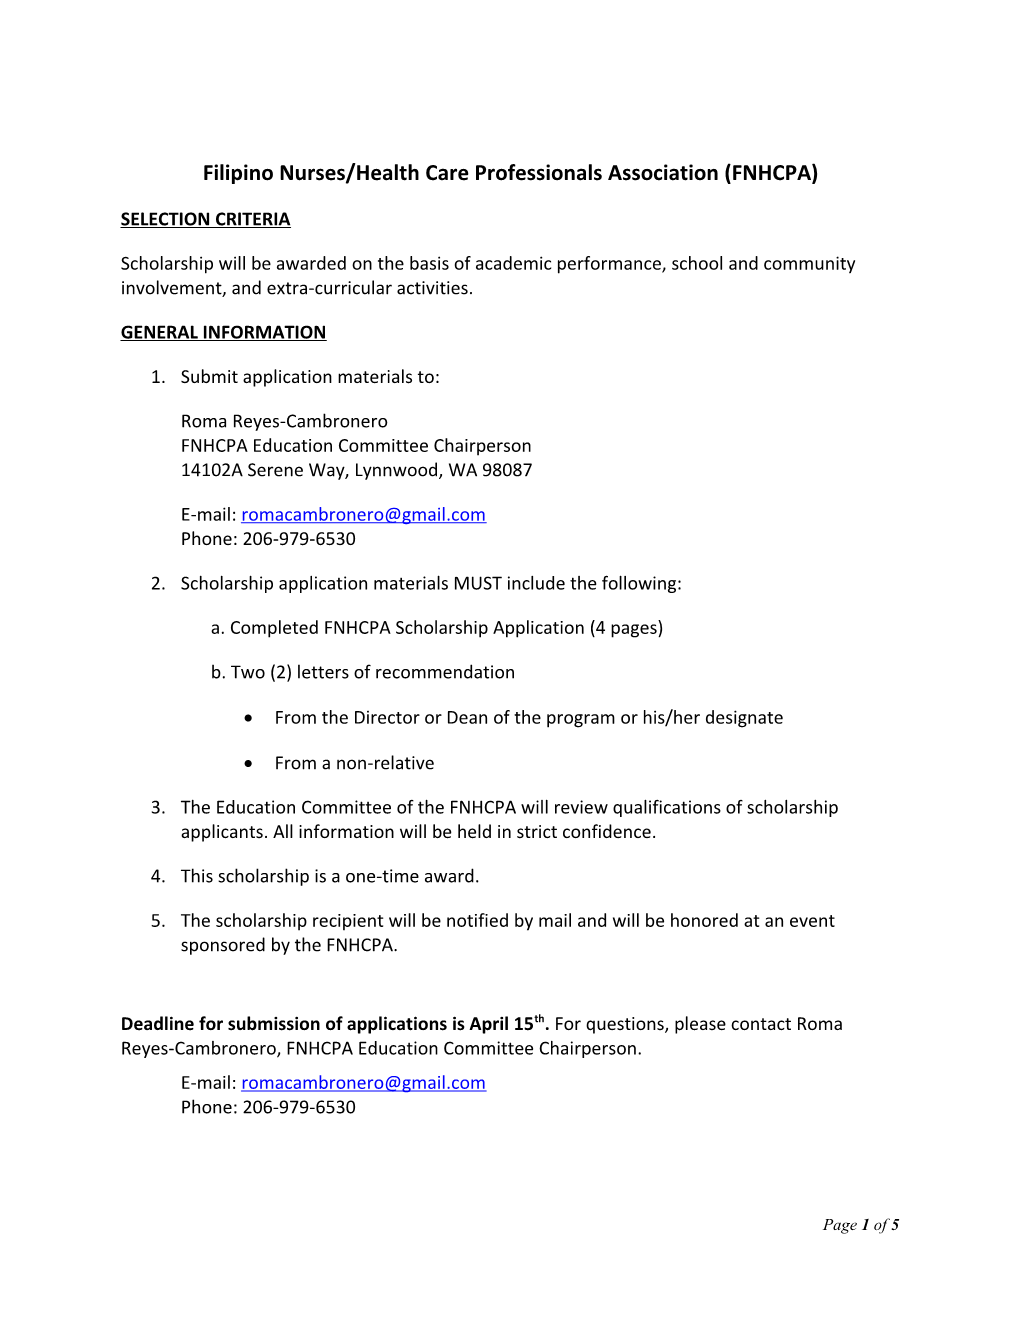 Filipino Nurses and Health Care Professionals Association (FNHCPA)